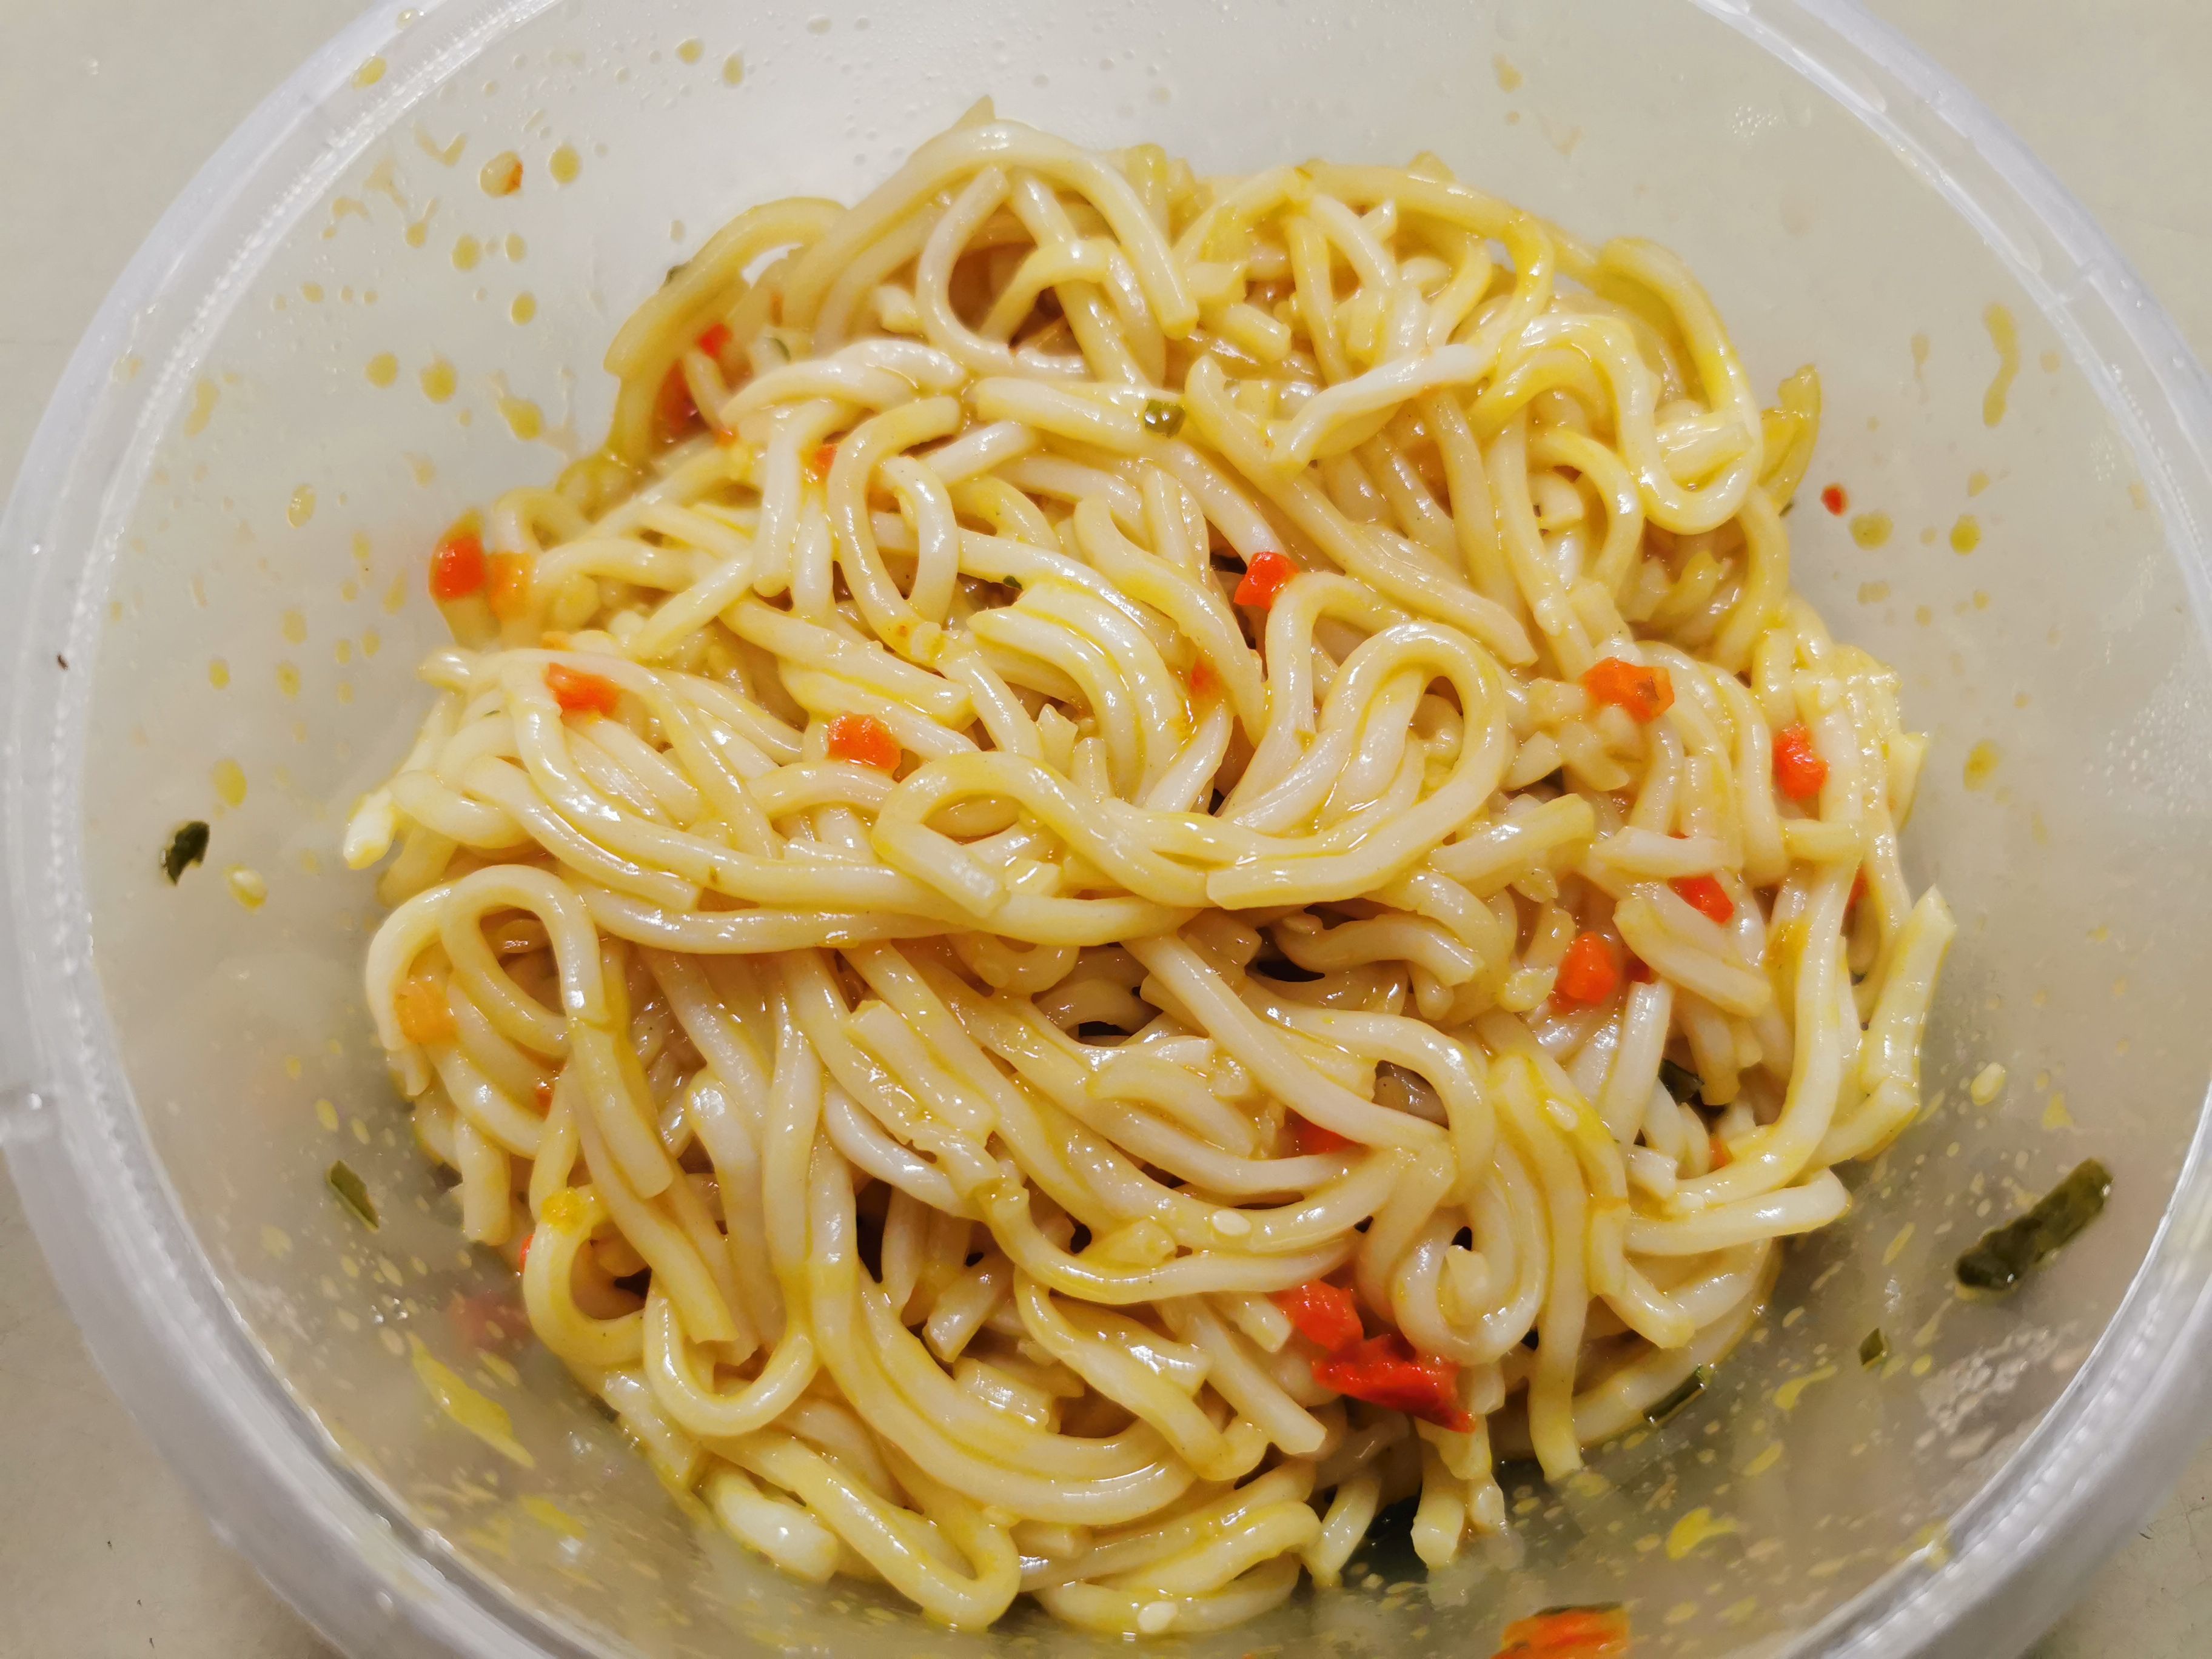 #2357: Obento "Spicy Sesame Ramen Noodle Bowl"